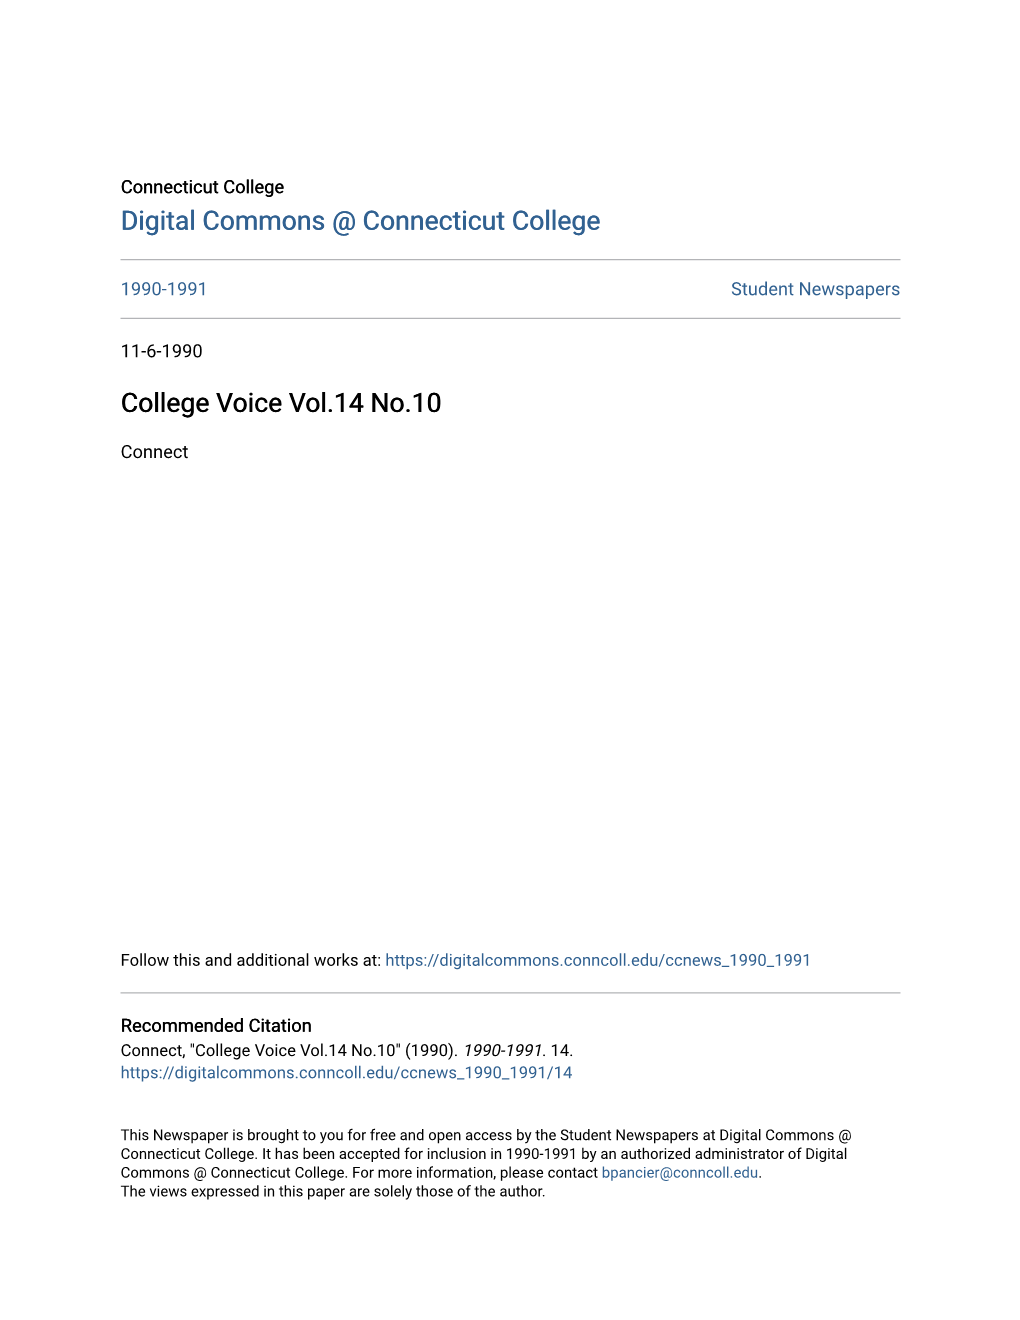 College Voice Vol.14 No.10